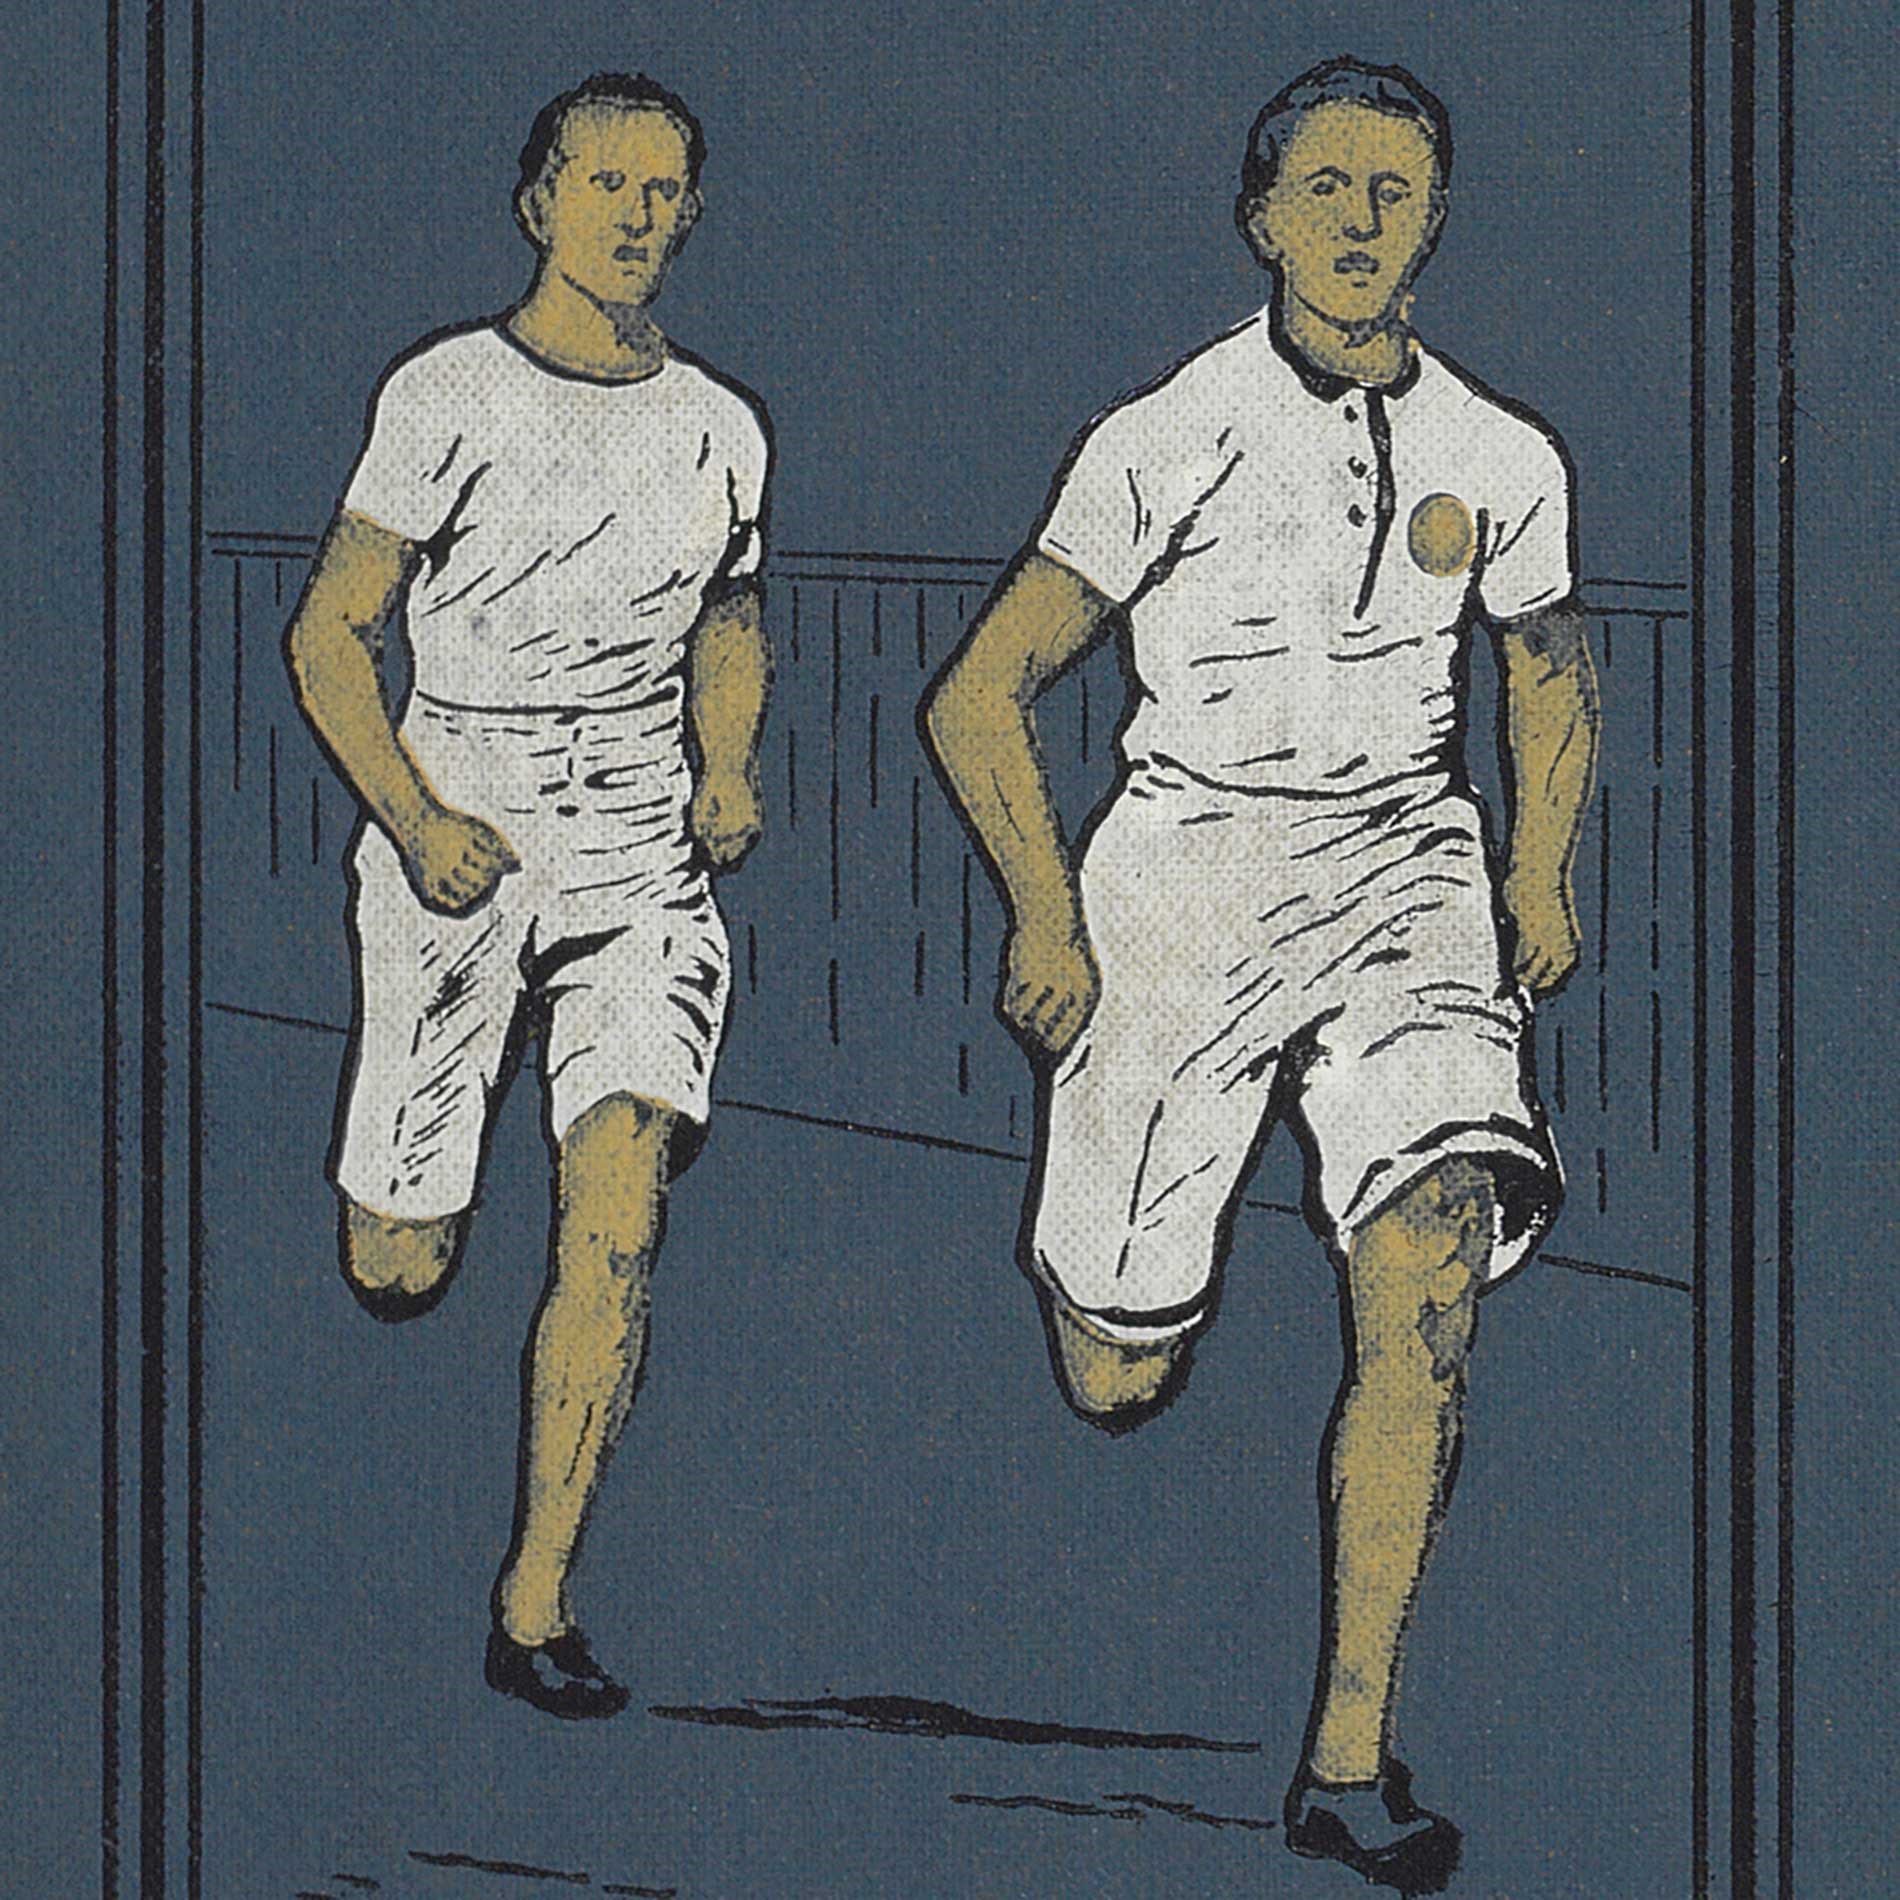 A sports book cover